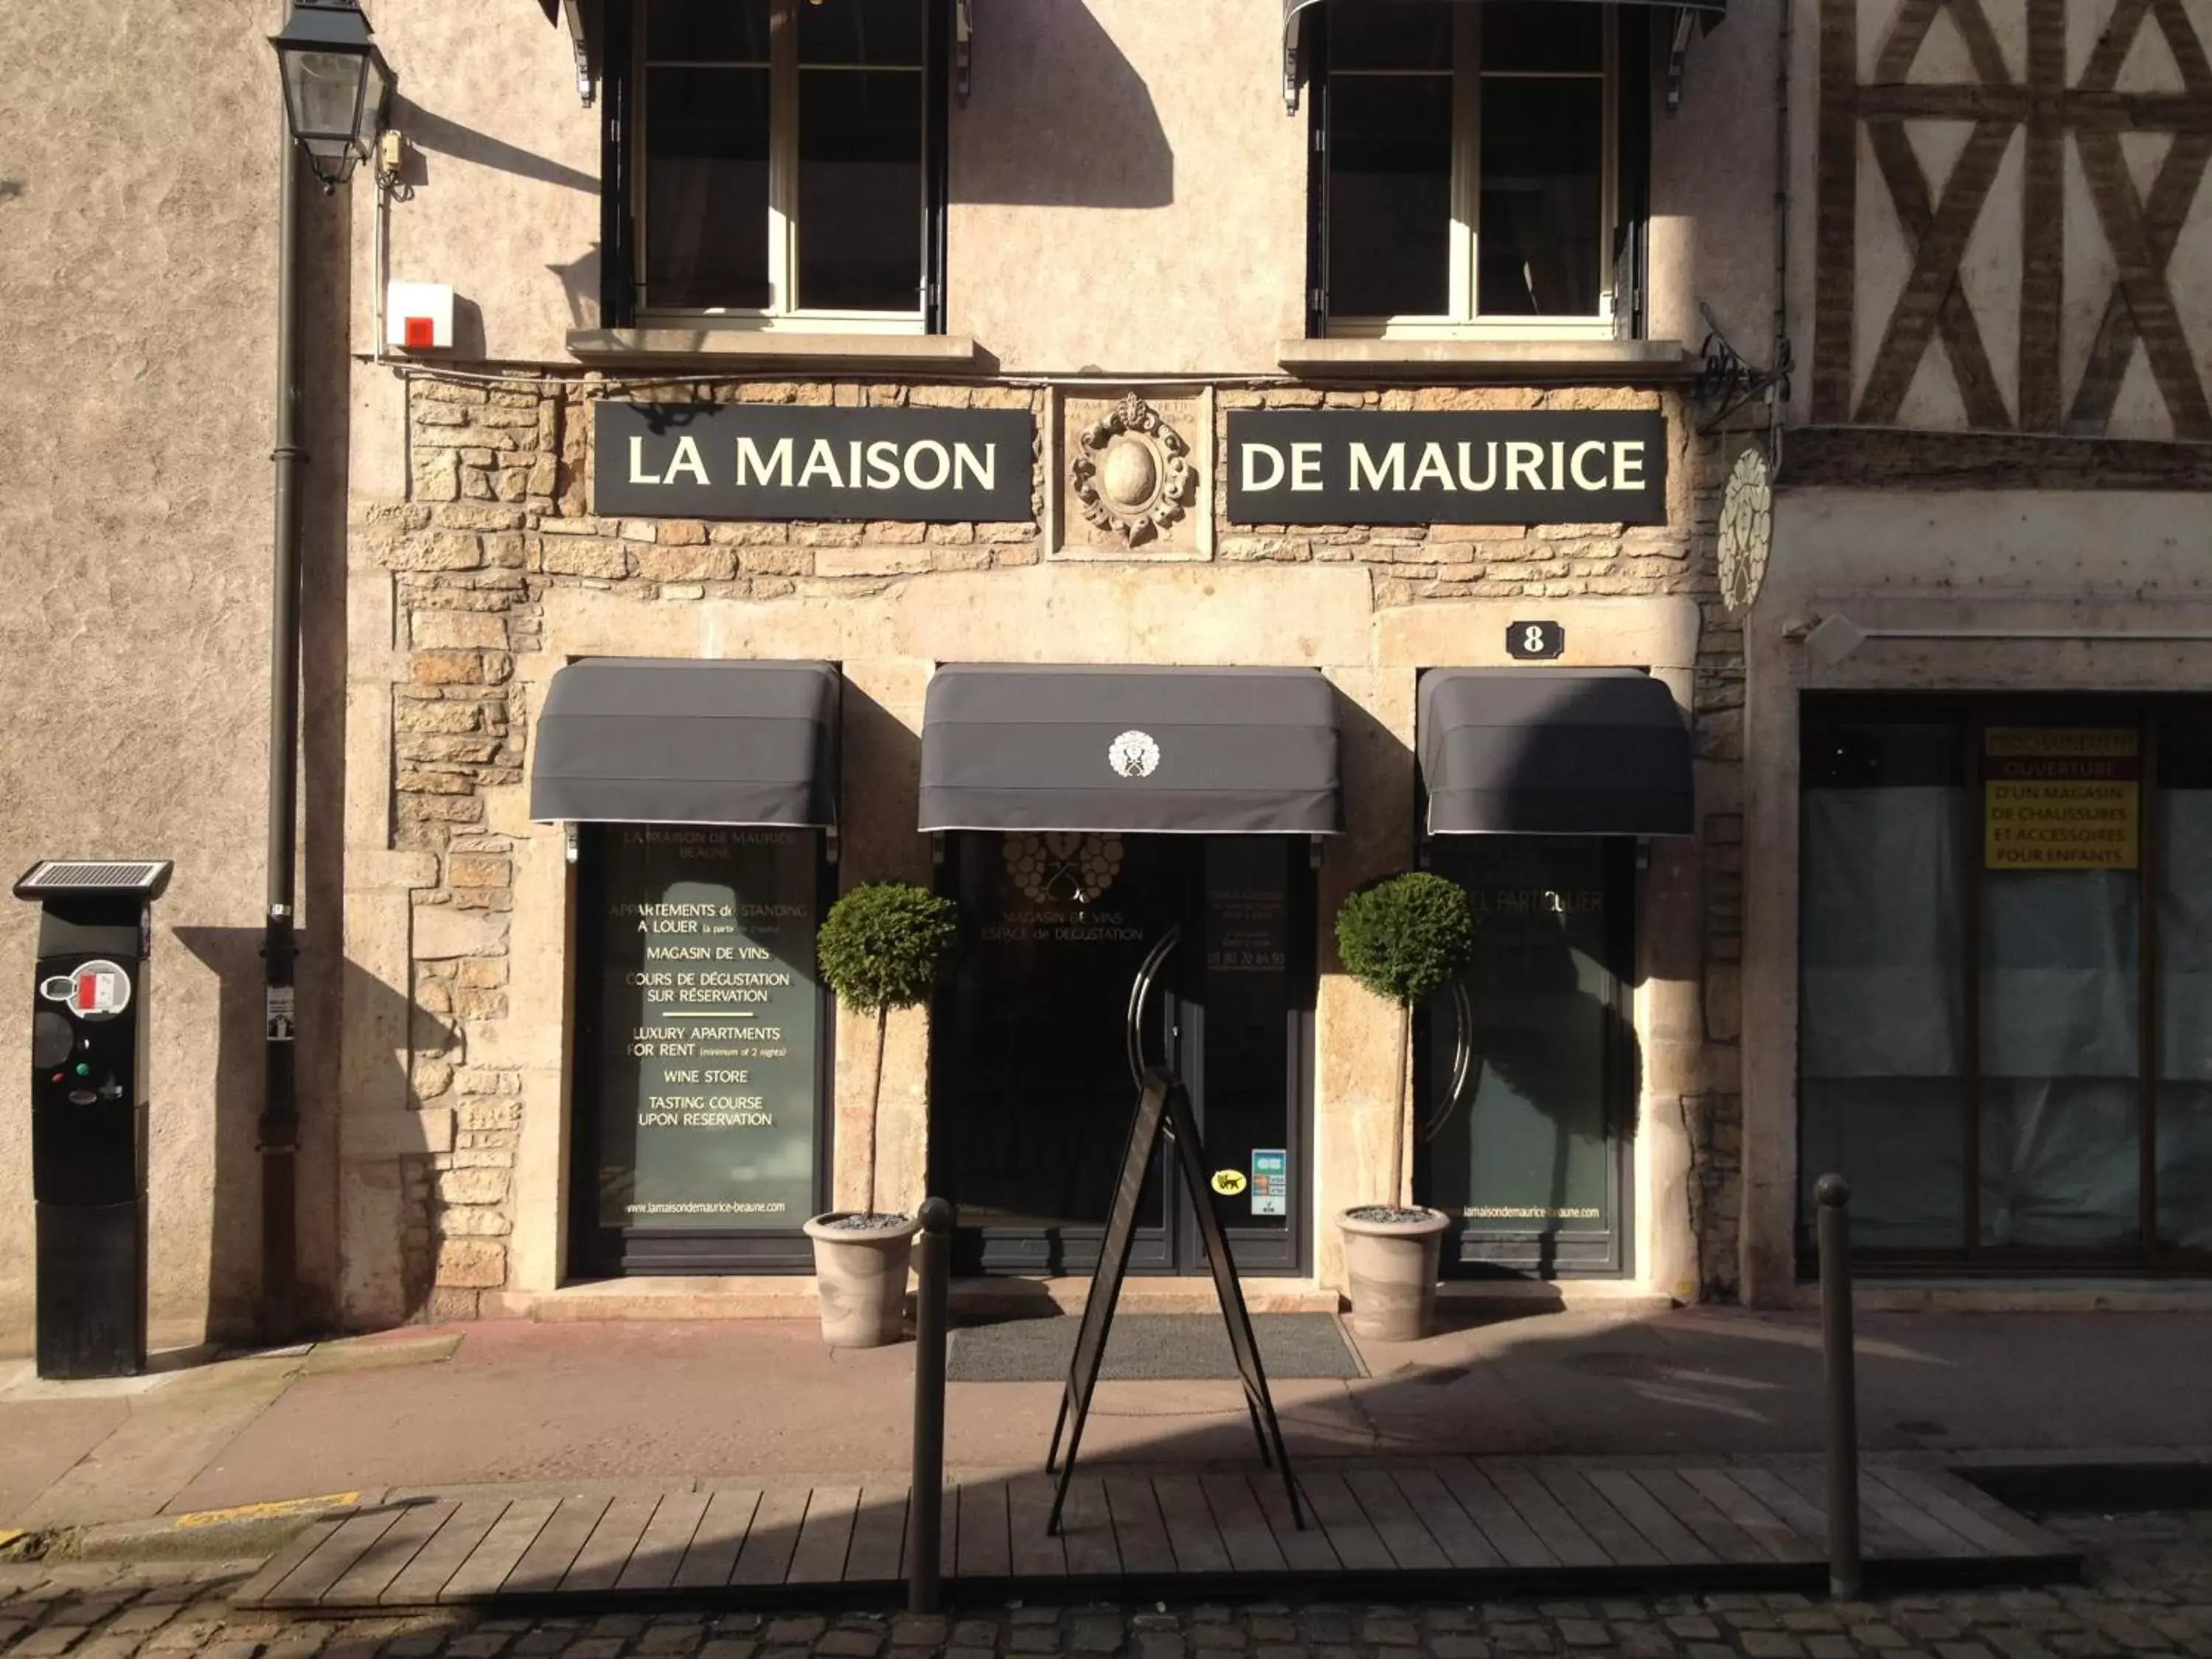 Facade/entrance in La Maison de Maurice